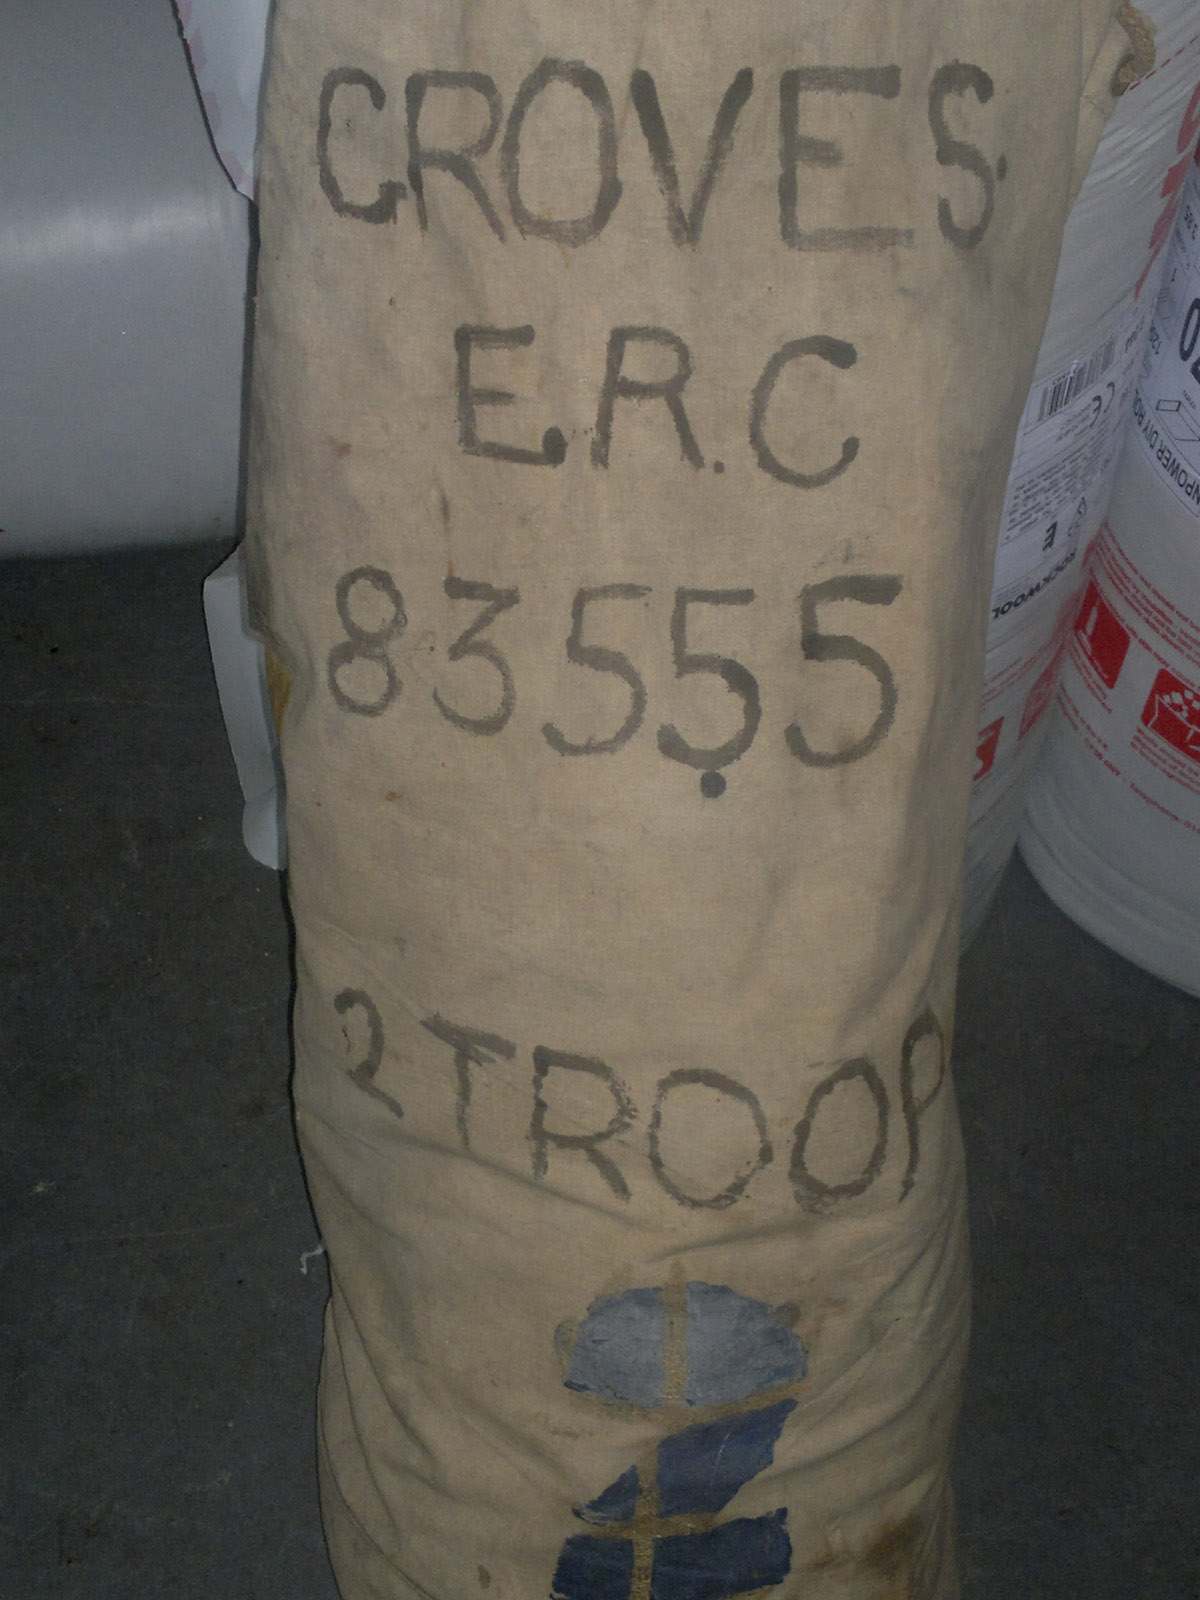 The kitbag of Eric Groves MM